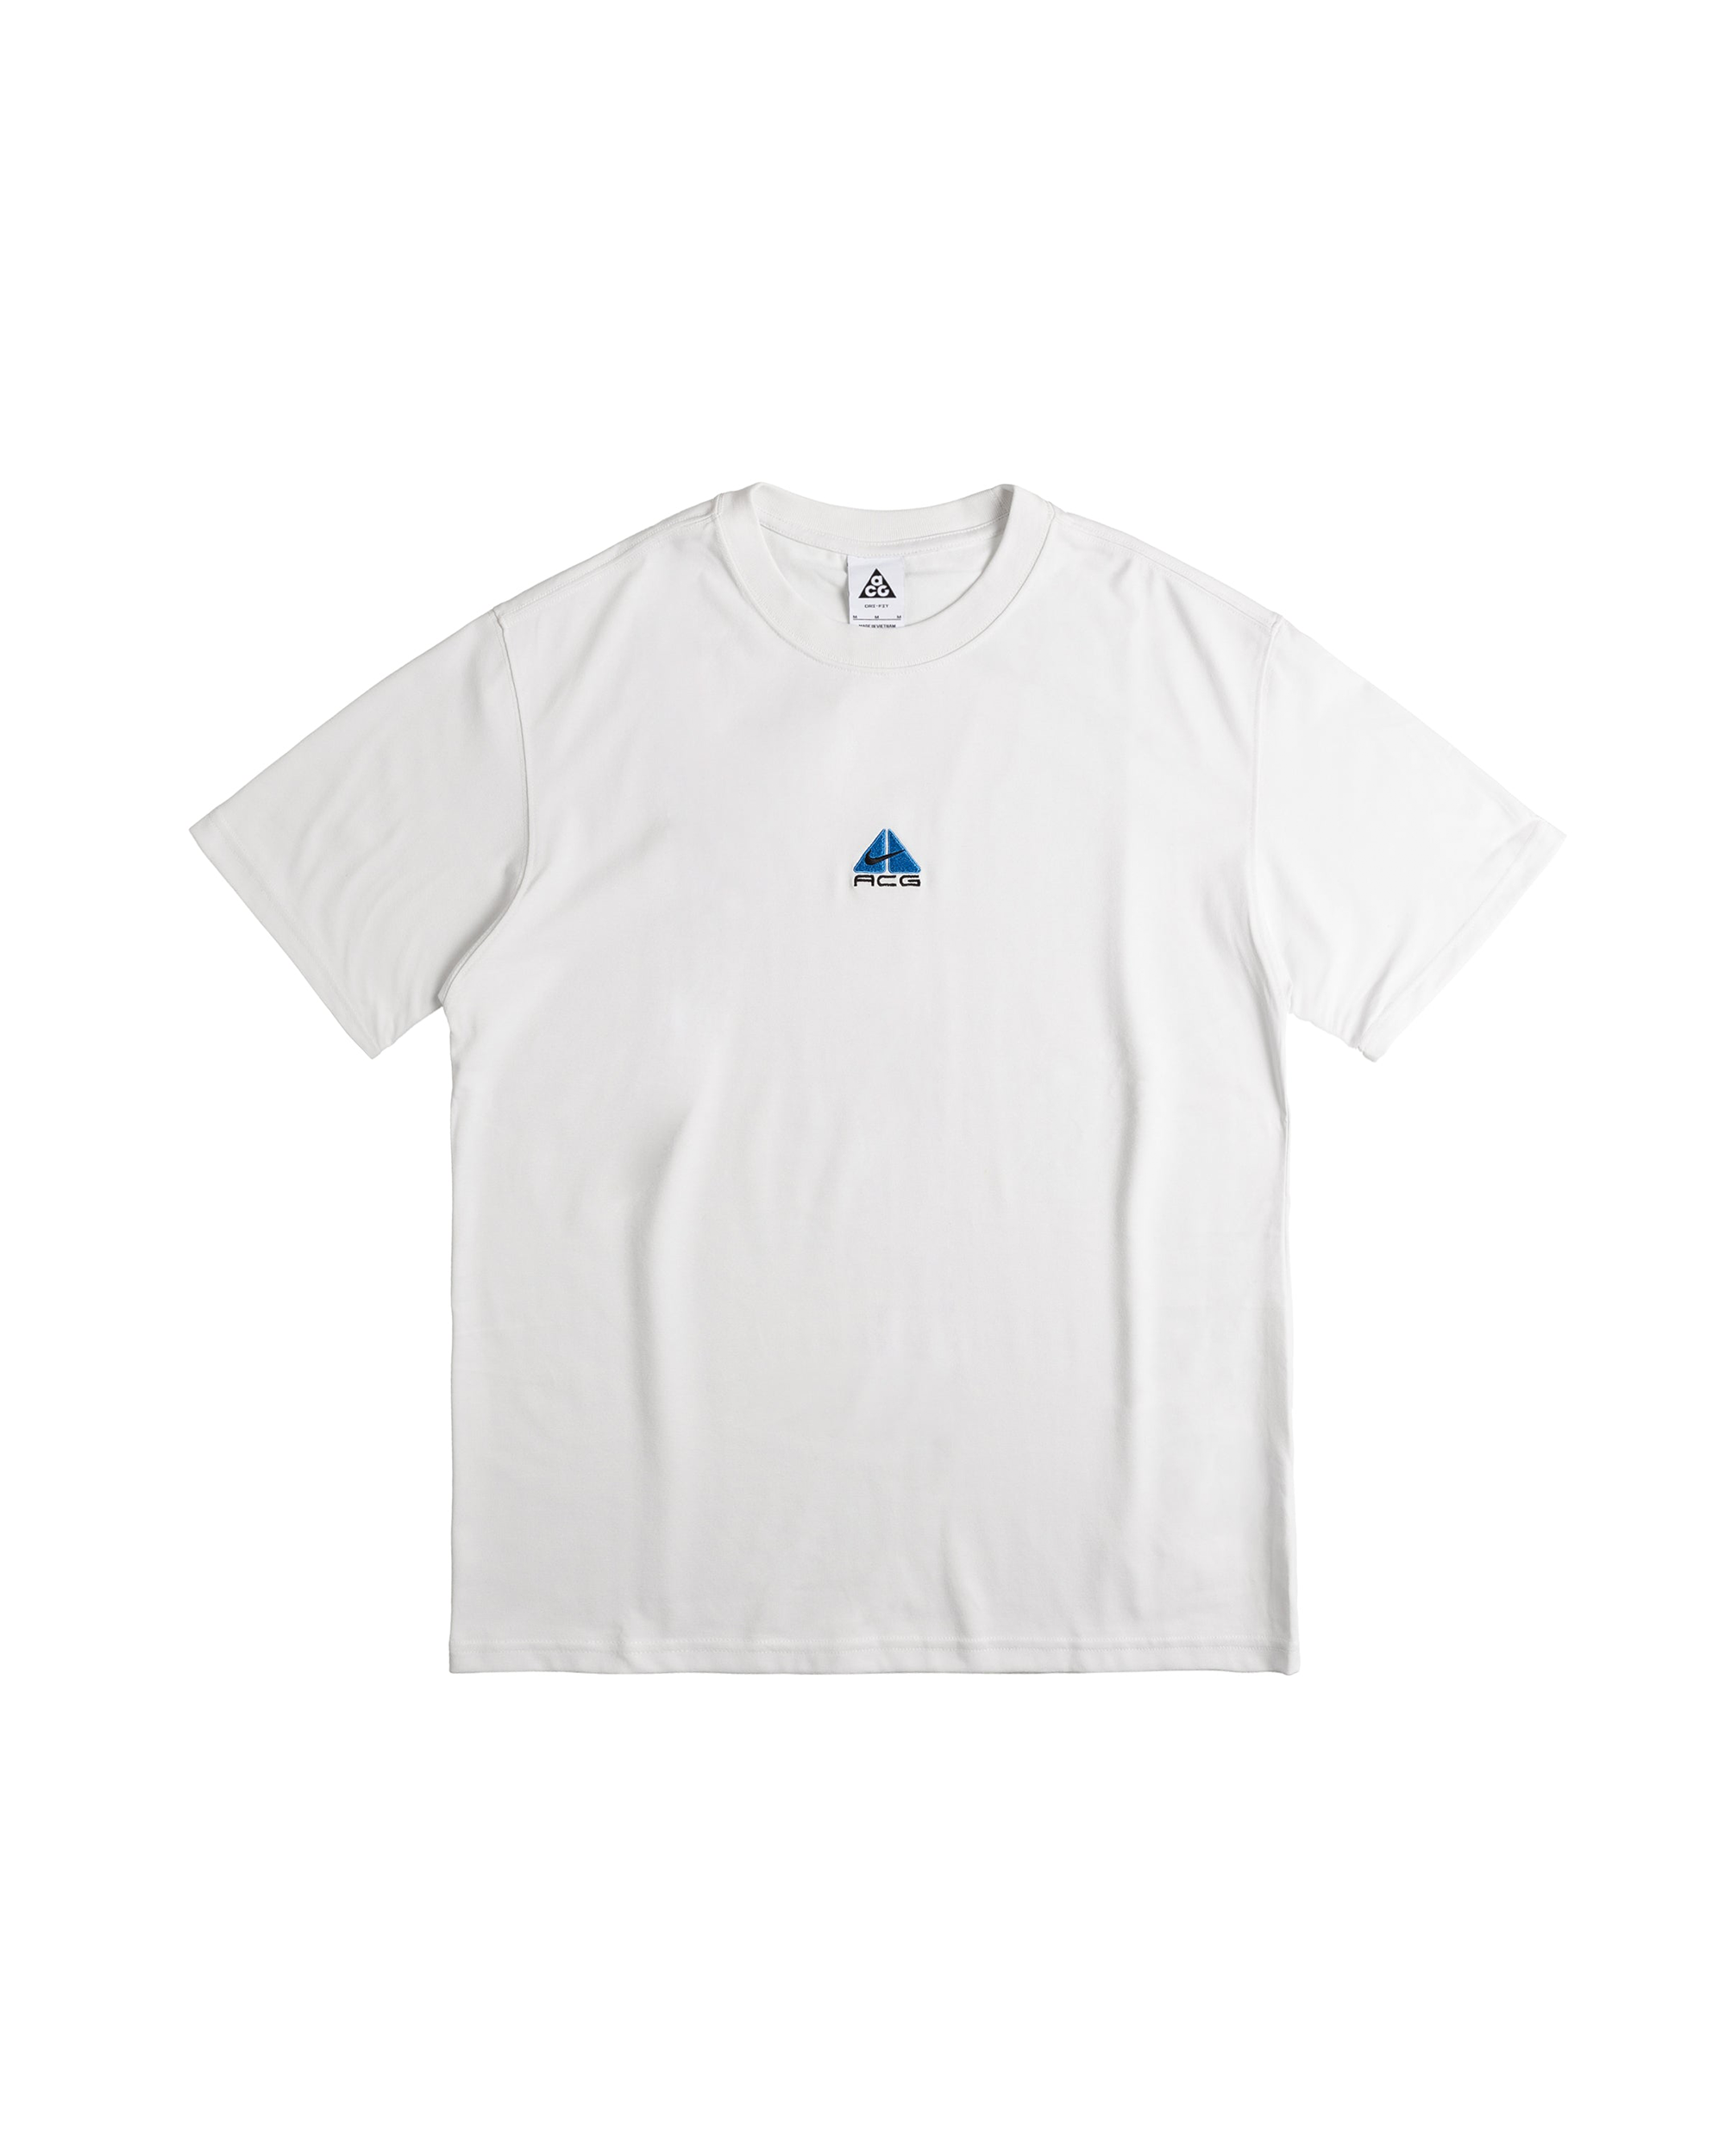 Lungs Logo T-shirt  - Summit White / Lt Photo Blue